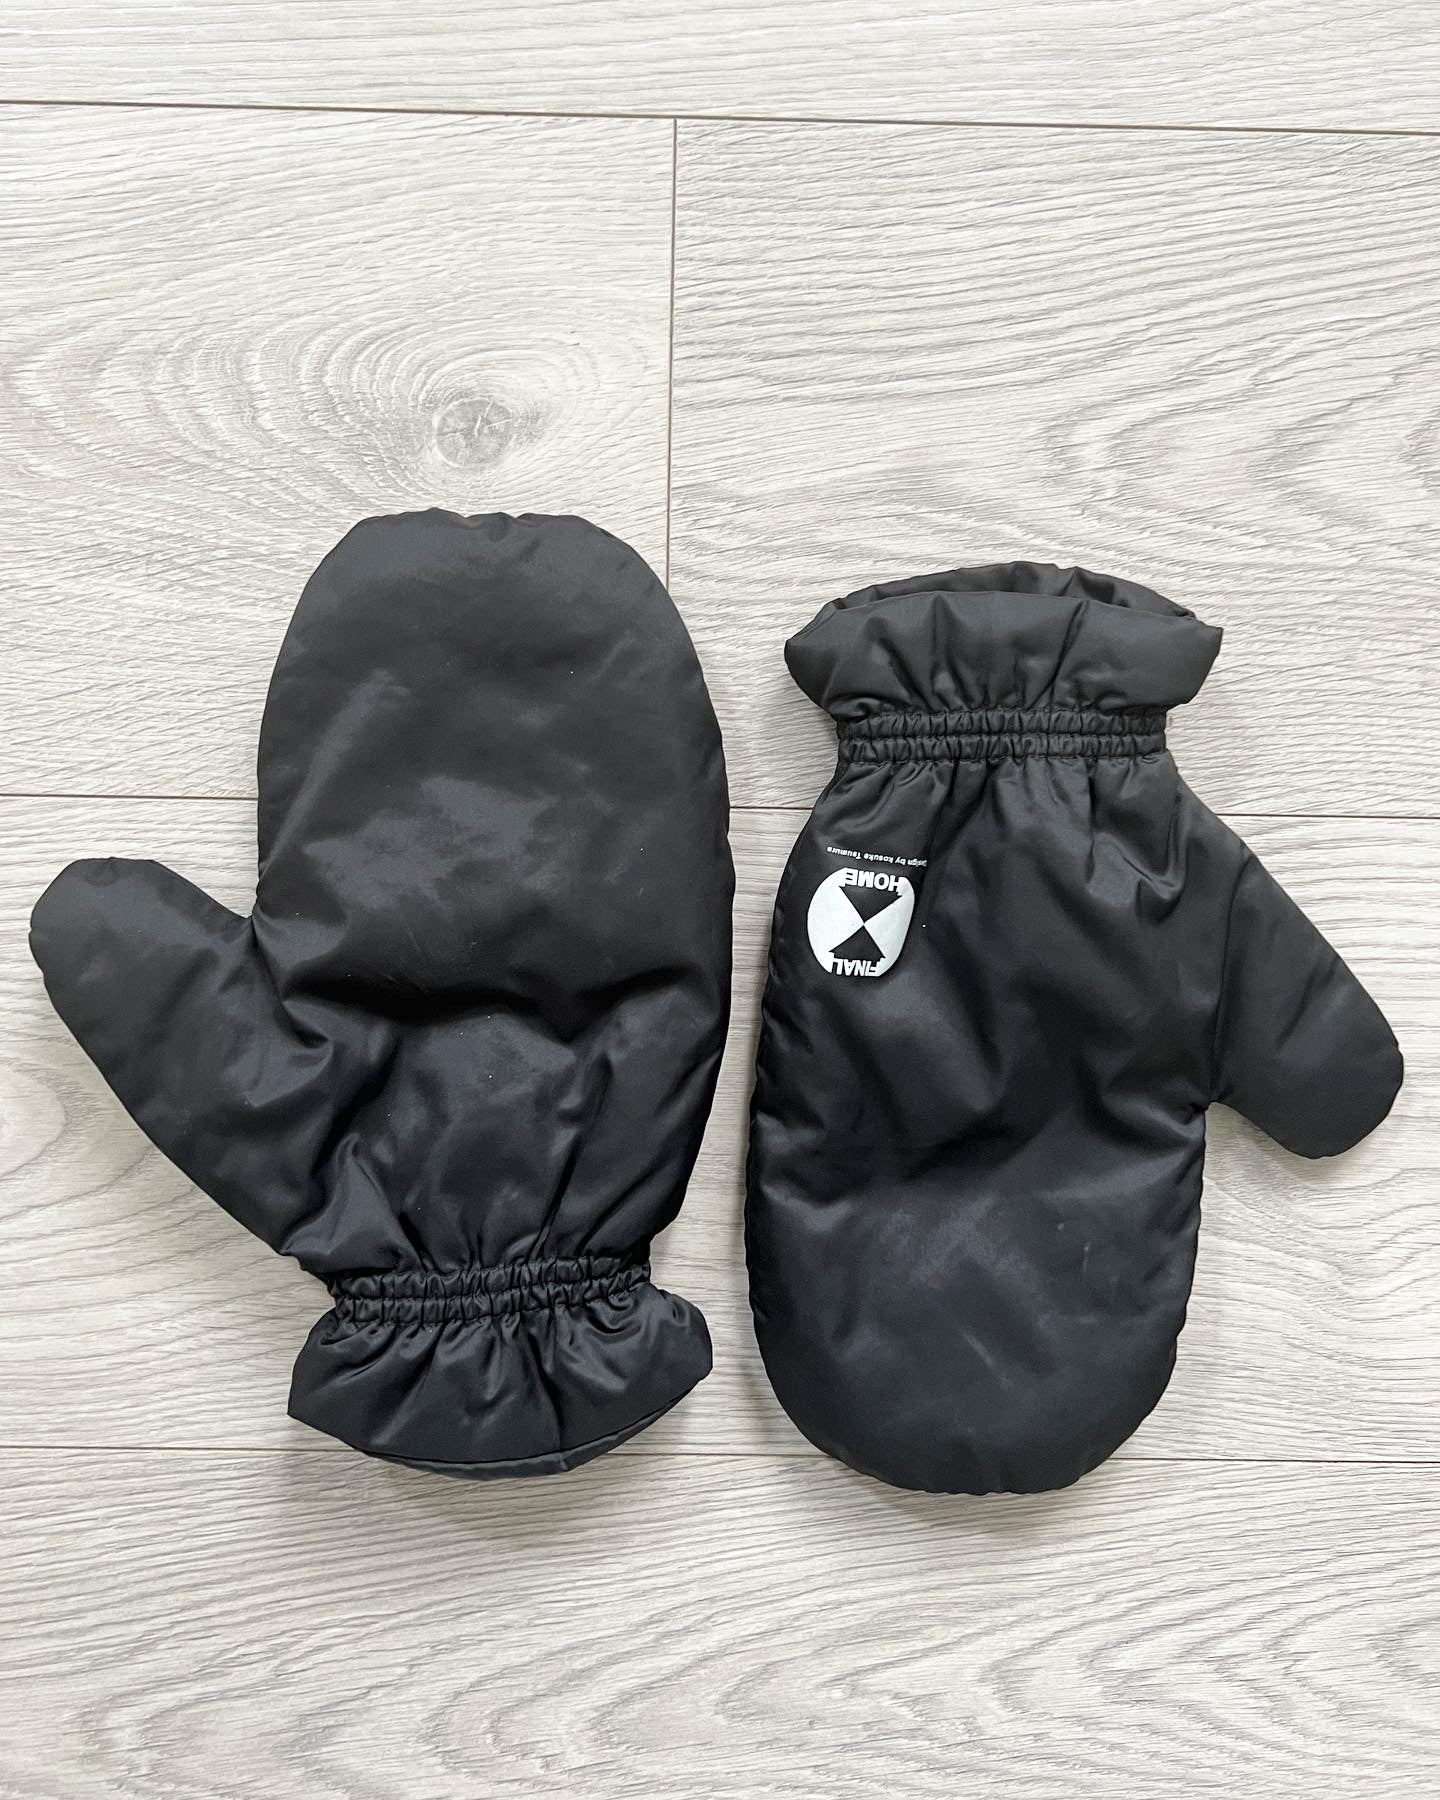 Final Home Vintage Survival Insulated Mitten Gloves